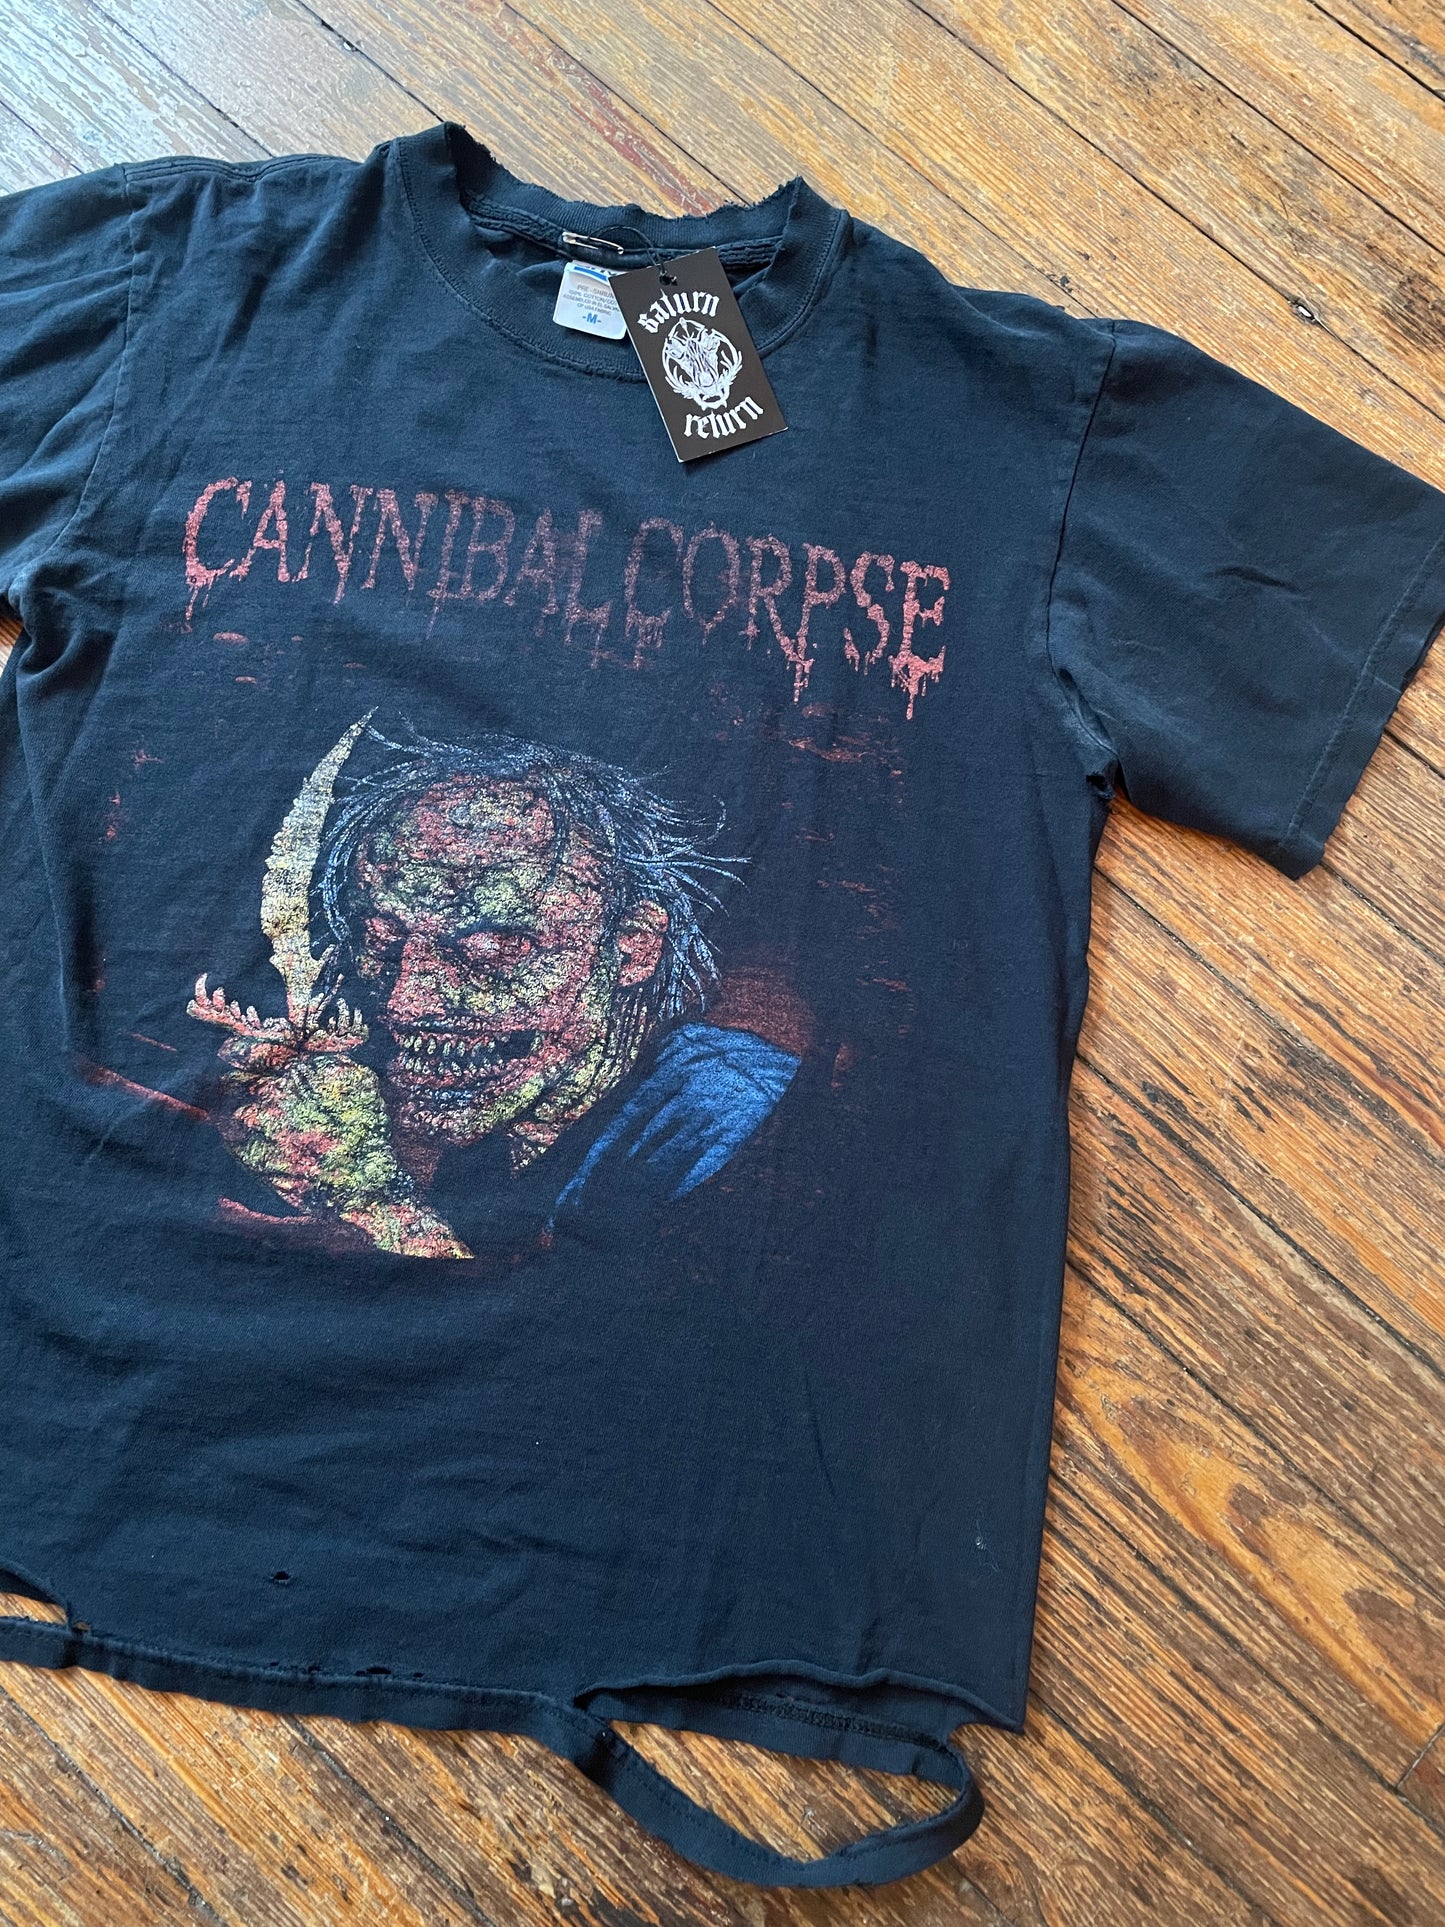 2006 Cannibal Corpse Kill Tour T-Shirt